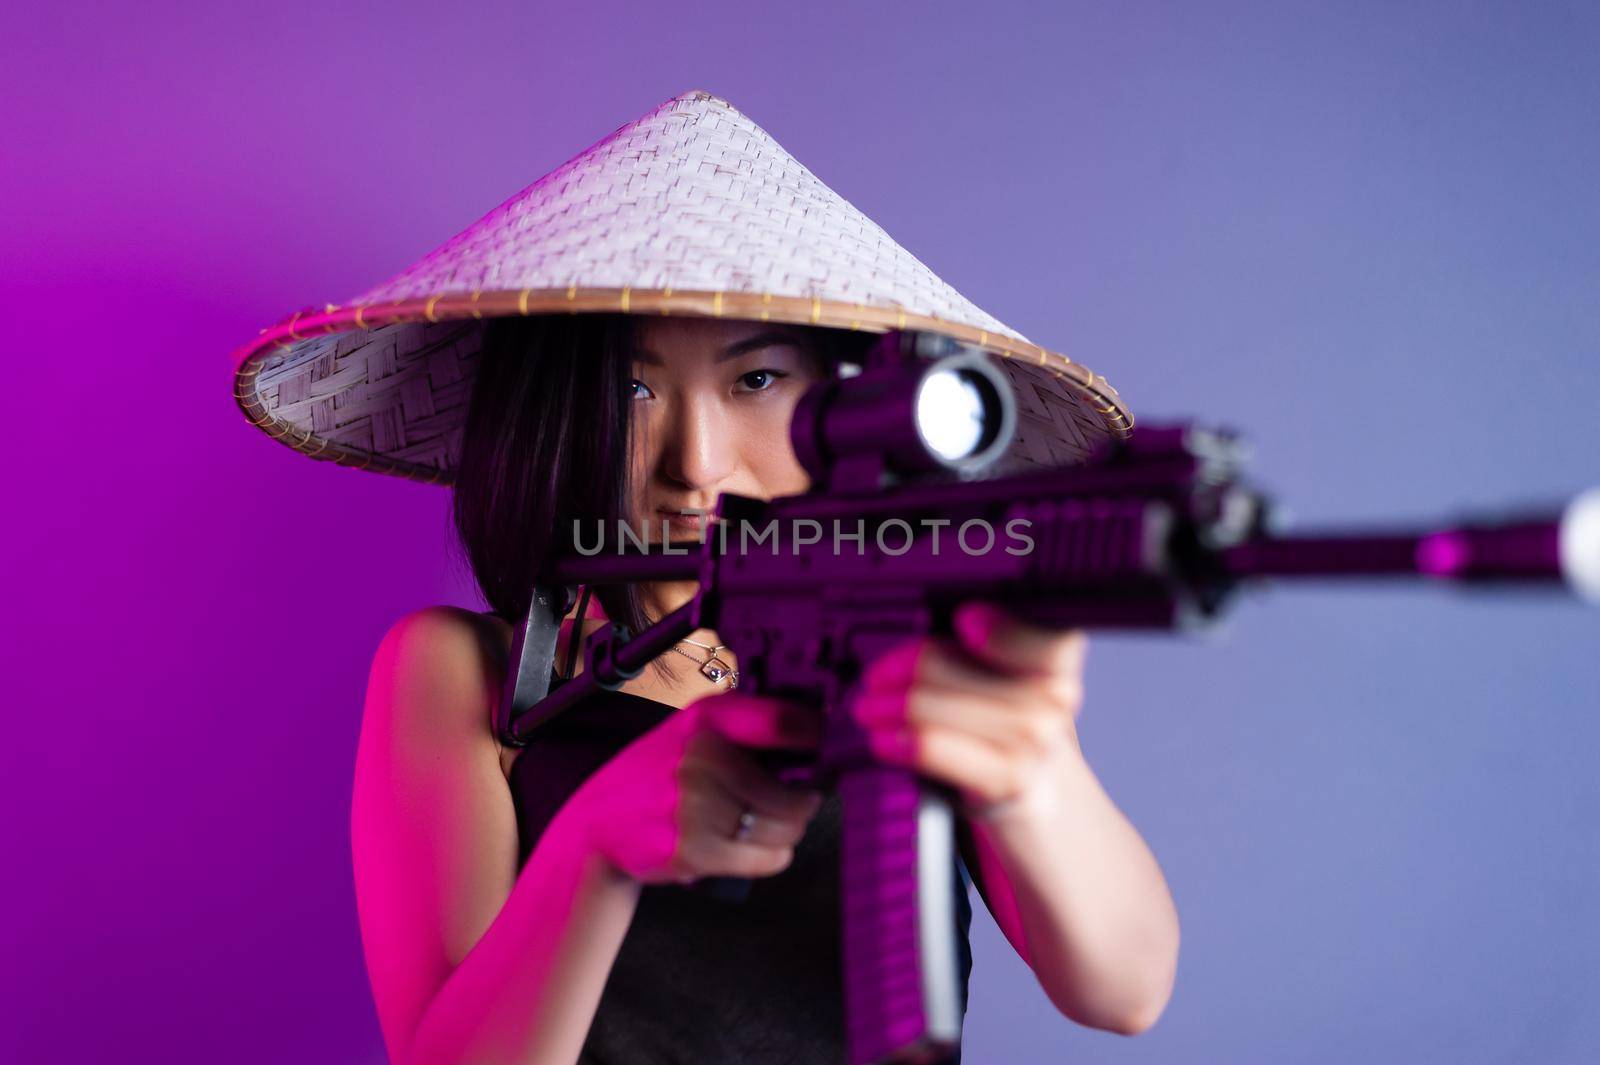 asian woman in an Asian hat with a machine gun aims